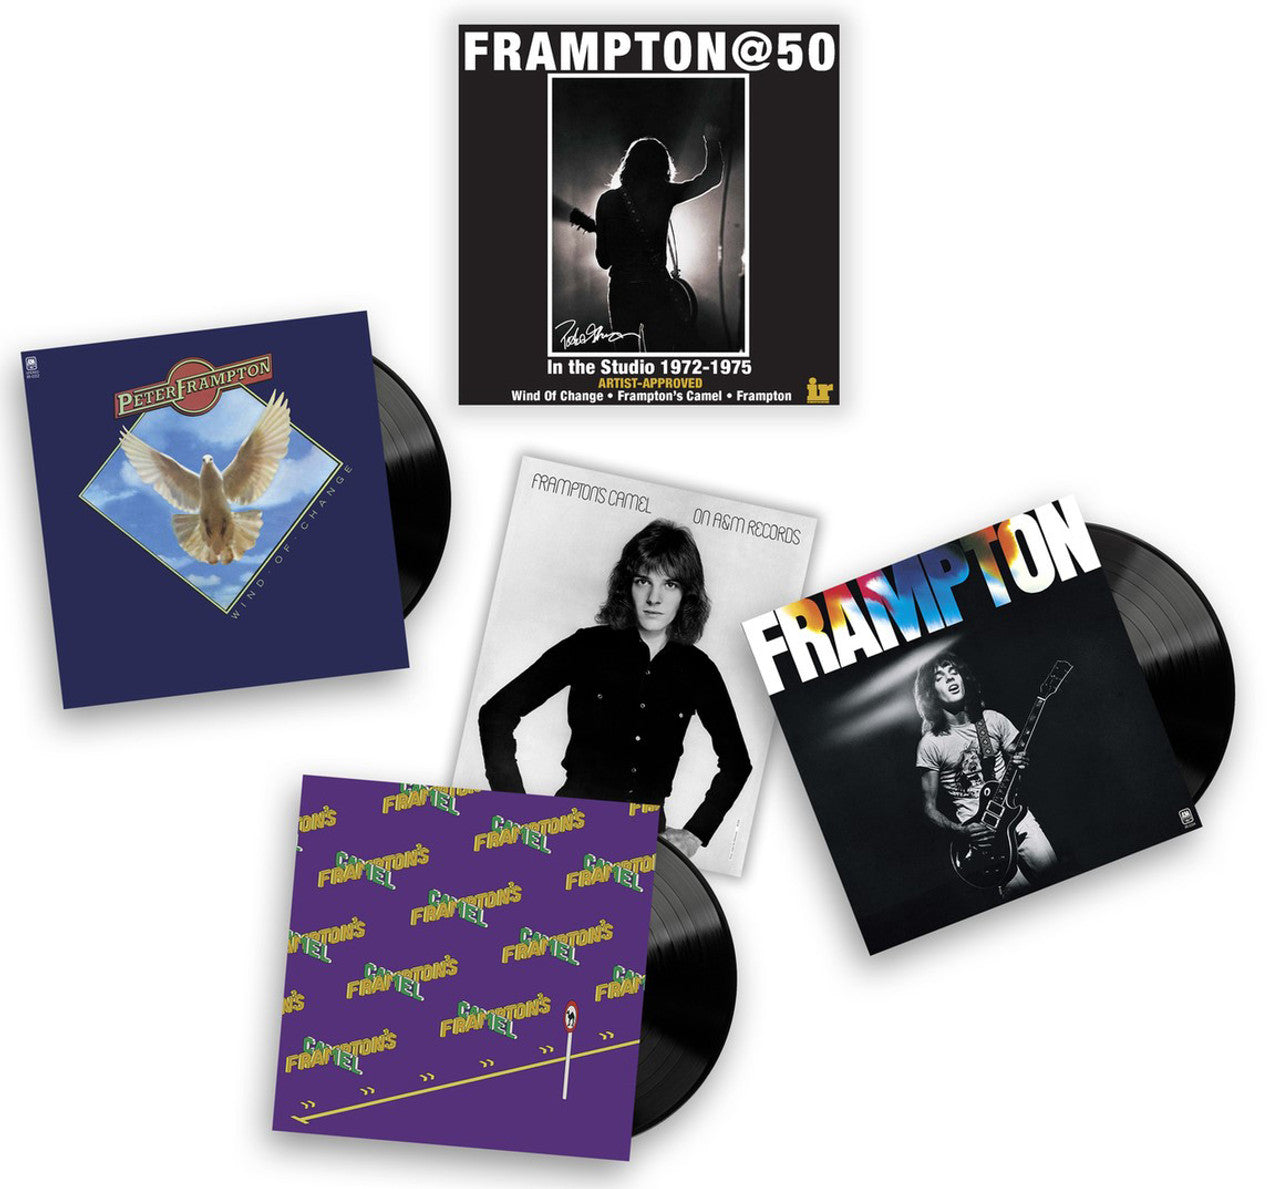 Peter Frampton - Frampton@50: In the Studio 1972-1975 [3LP Box] (180 Gram Audiophile Vinyl, 100% analog mastering from tape, gatefold jackets, vintage poster, limited/numbered to 2500)